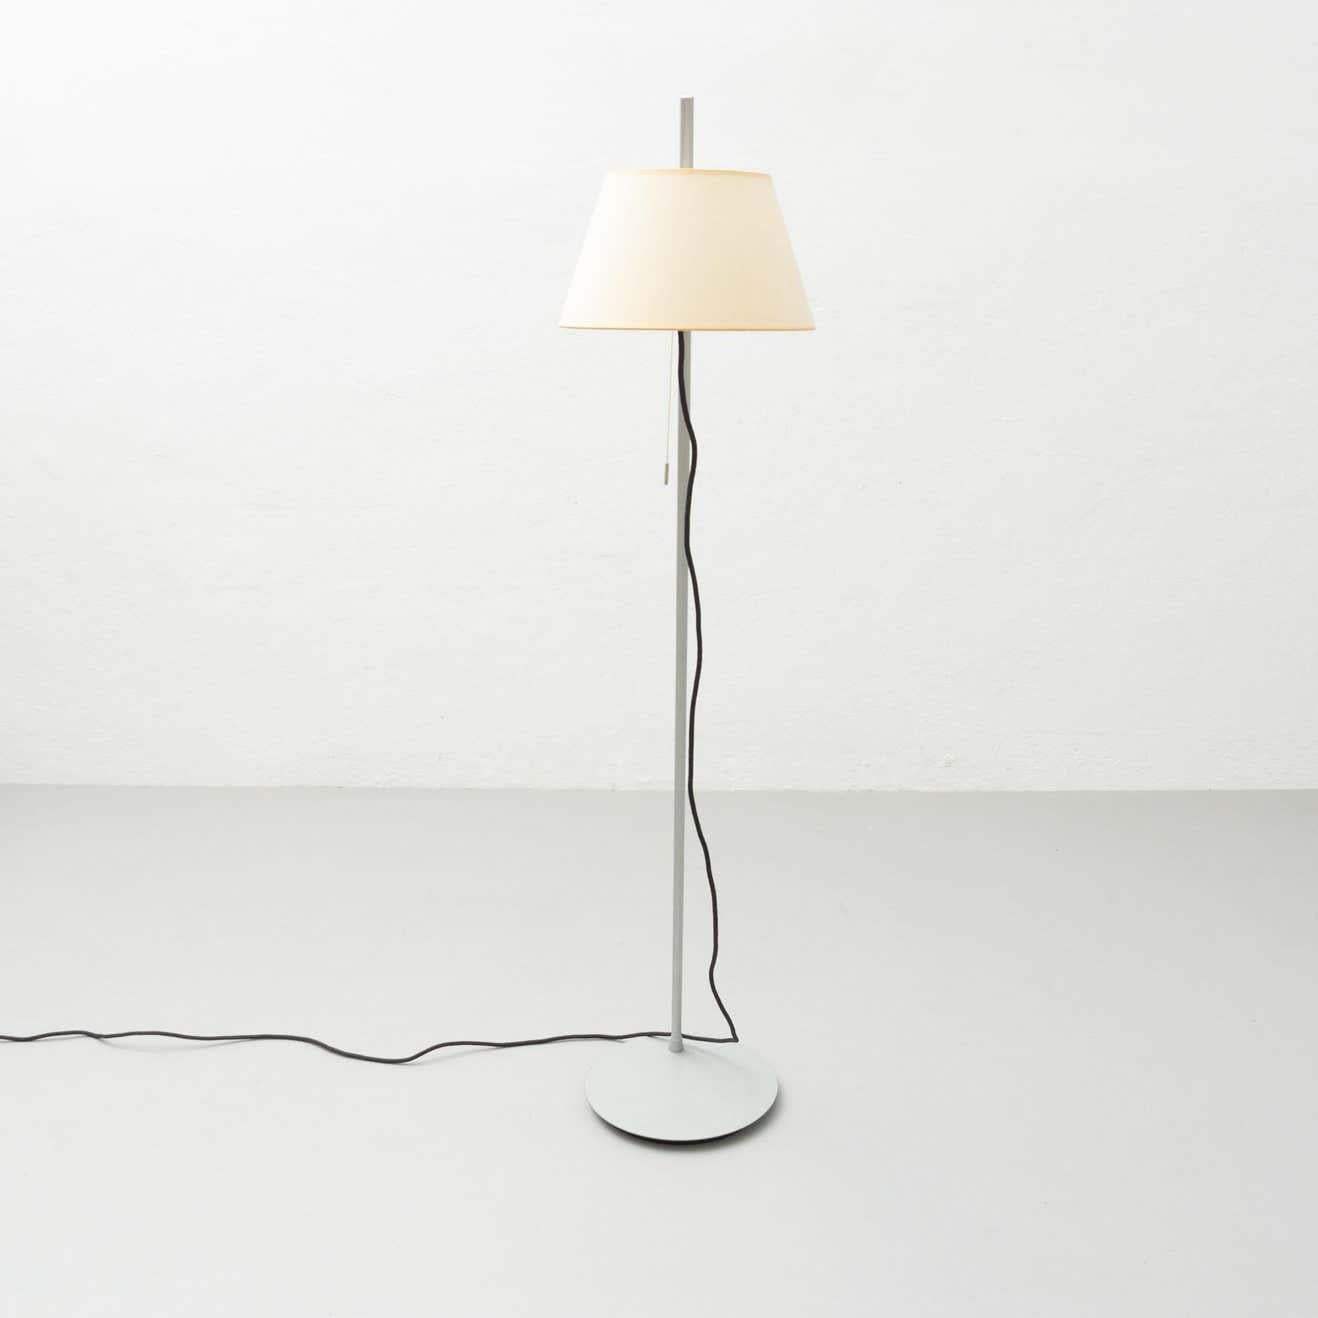 Spanish Estudio Blanch Simplisima Floor Lamp by Metalarte, circa 1970 For Sale